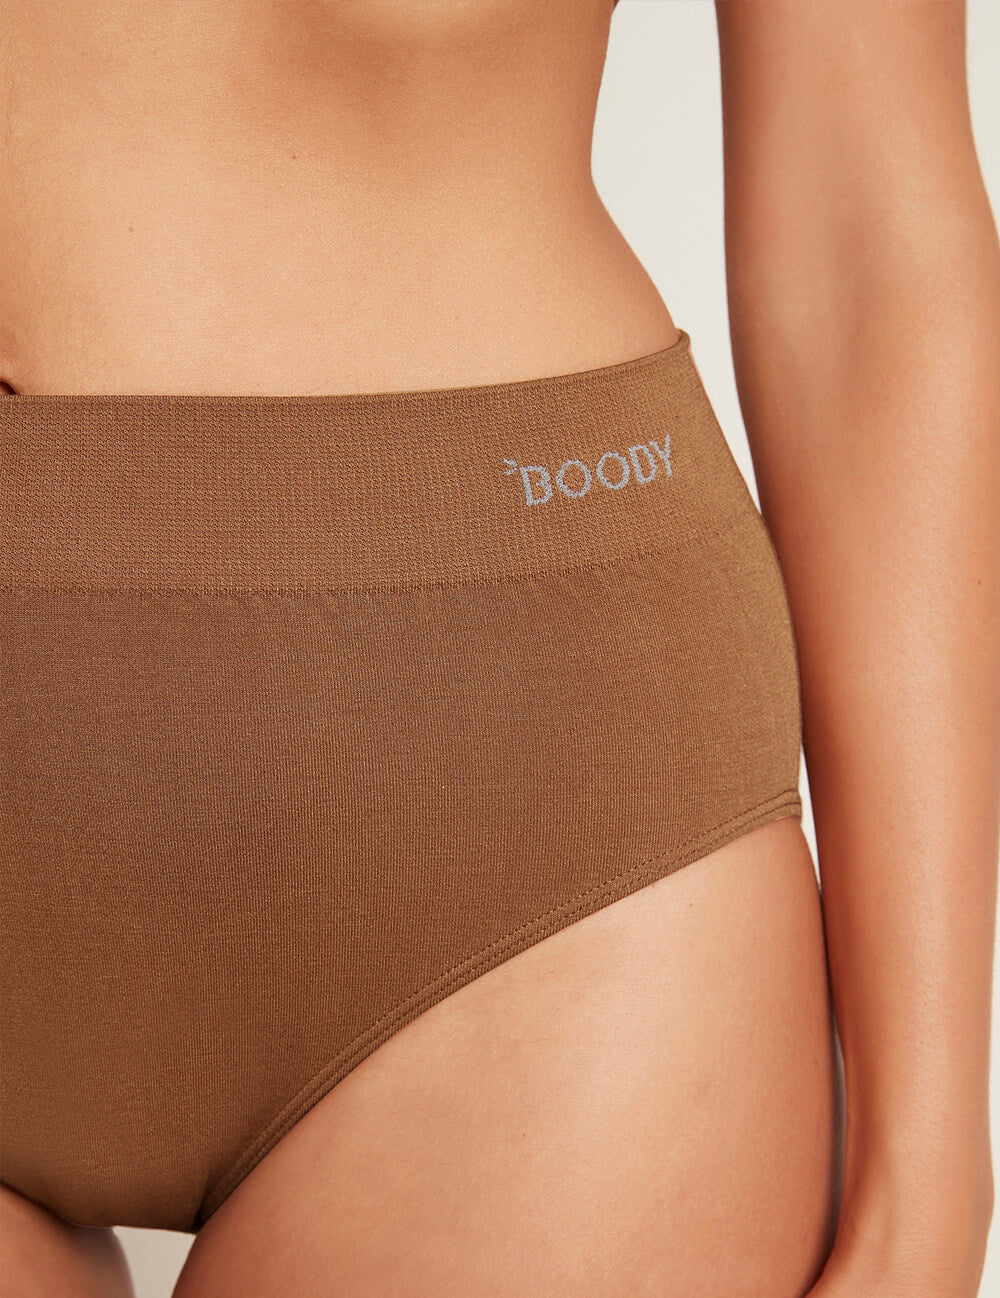 Boody Organic Bamboo Ecowear Women's Full Legging - X-large - Black 